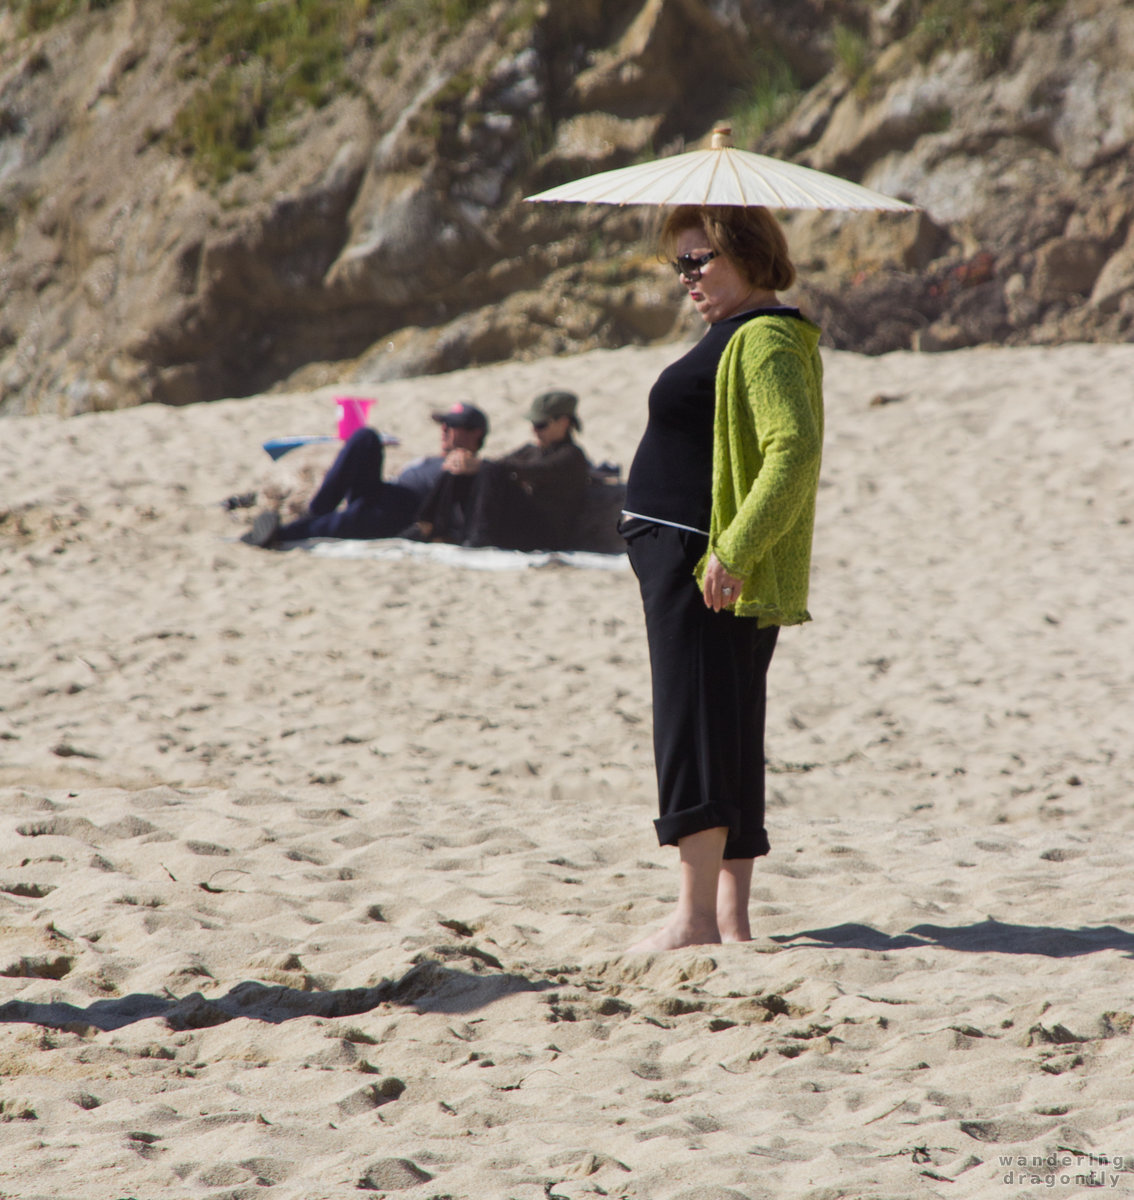 Every shadow counts -- sand, umbrella, woman